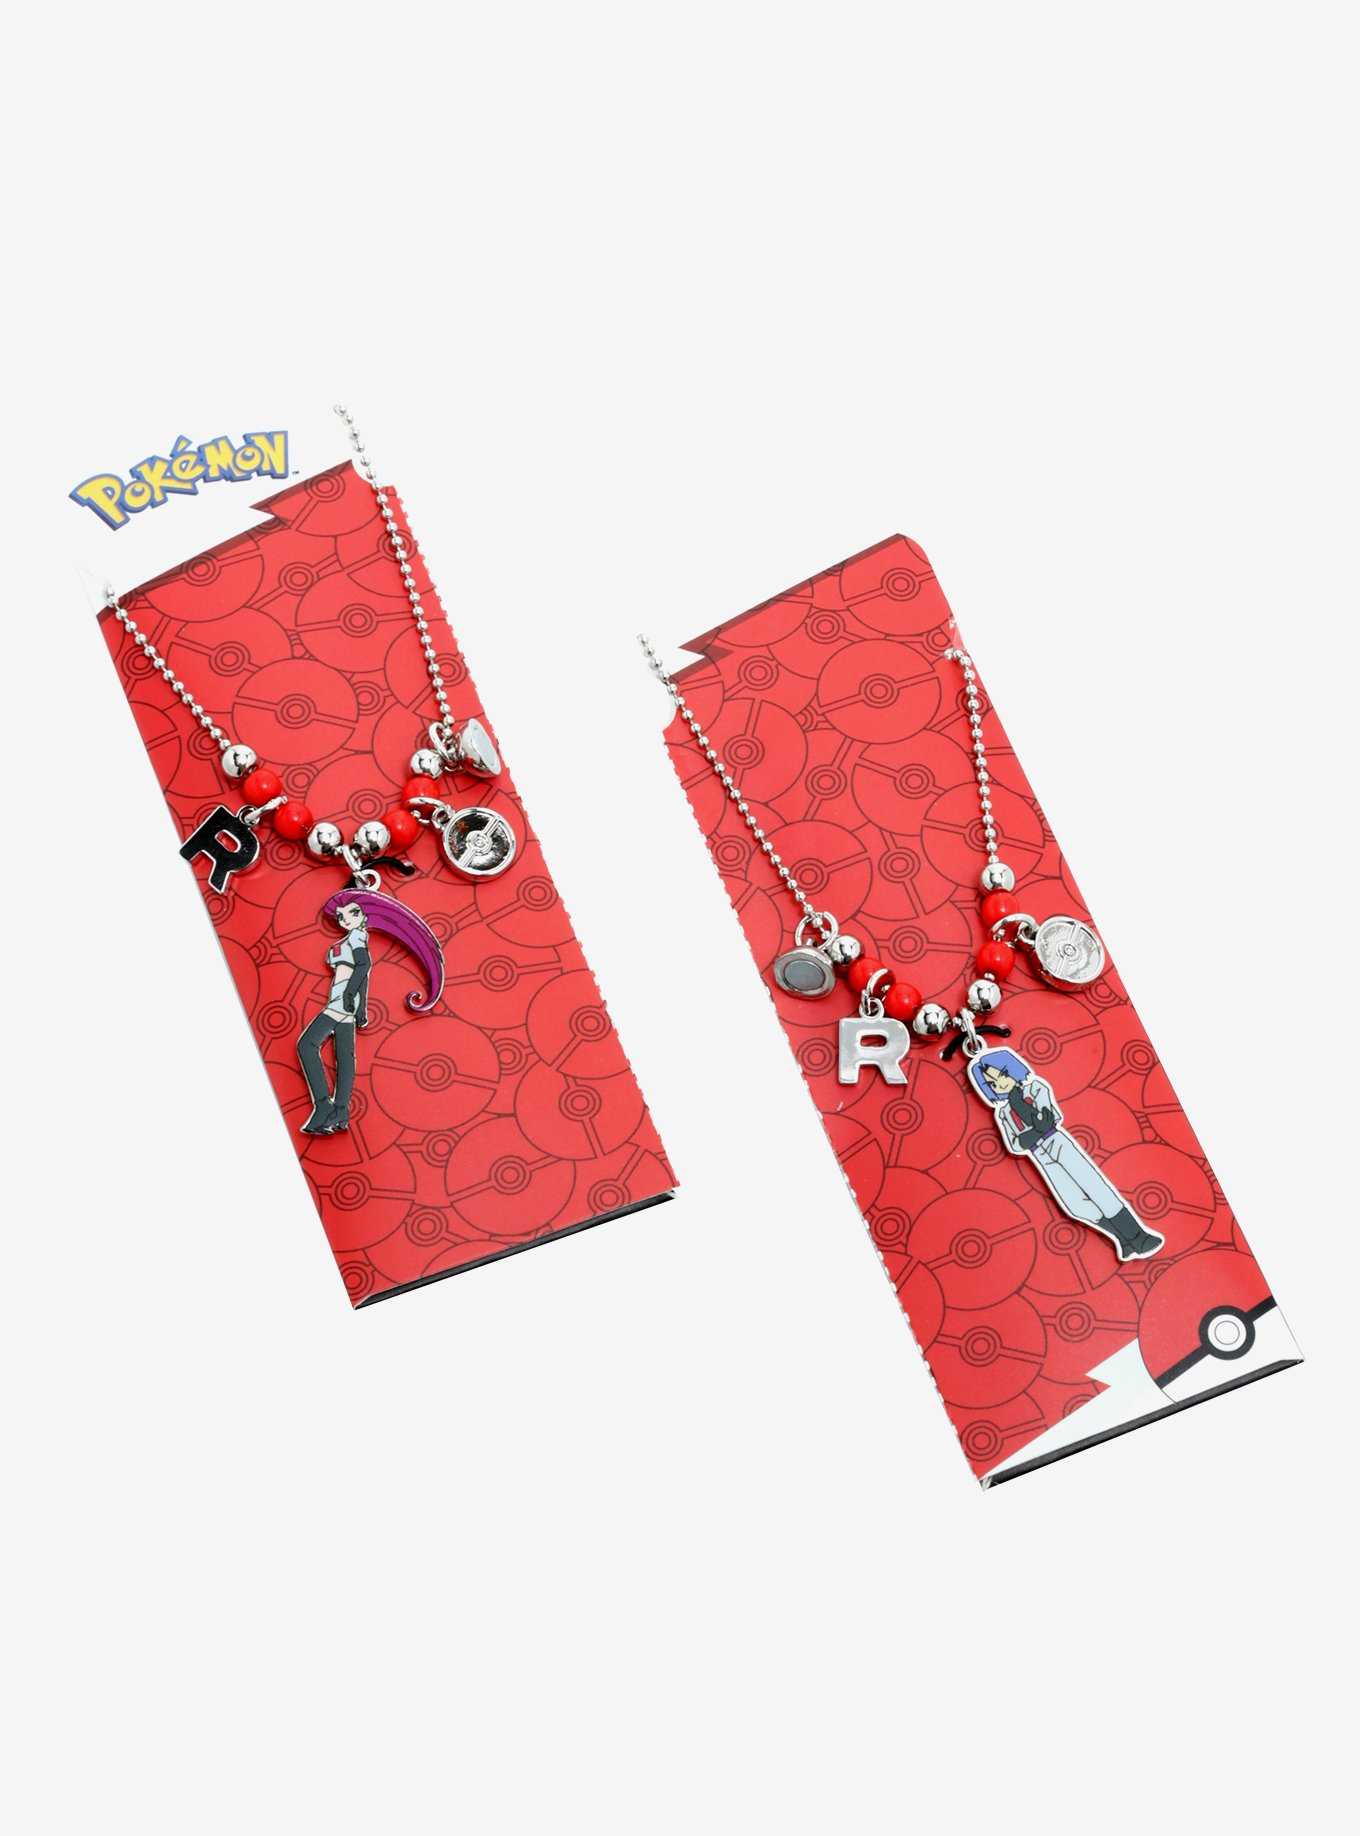 Pokémon Team Rocket Jessie & James Bestie Necklace Set - BoxLunch Exclusive, , hi-res